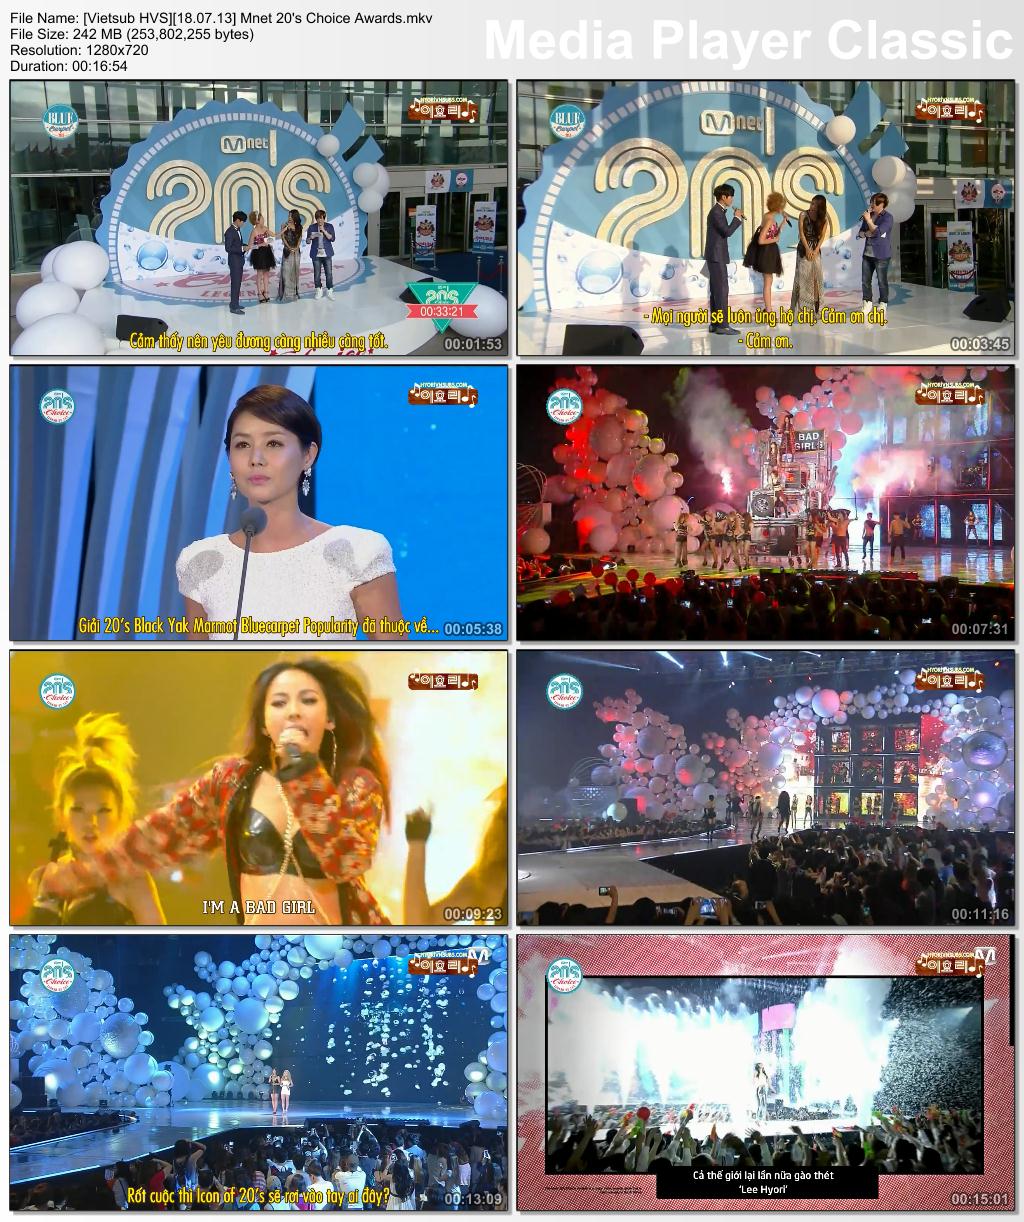 [HOT Vietsub][18.07.13] 2013 Mnet 20's Choice Awards - Page 3 %255BVietsub+HVS%255D%255B18.07.13%255D+Mnet+20%2527s+Choice+Awards.mkv_thumbs_%255B2013.07.22_02.16.24%255D